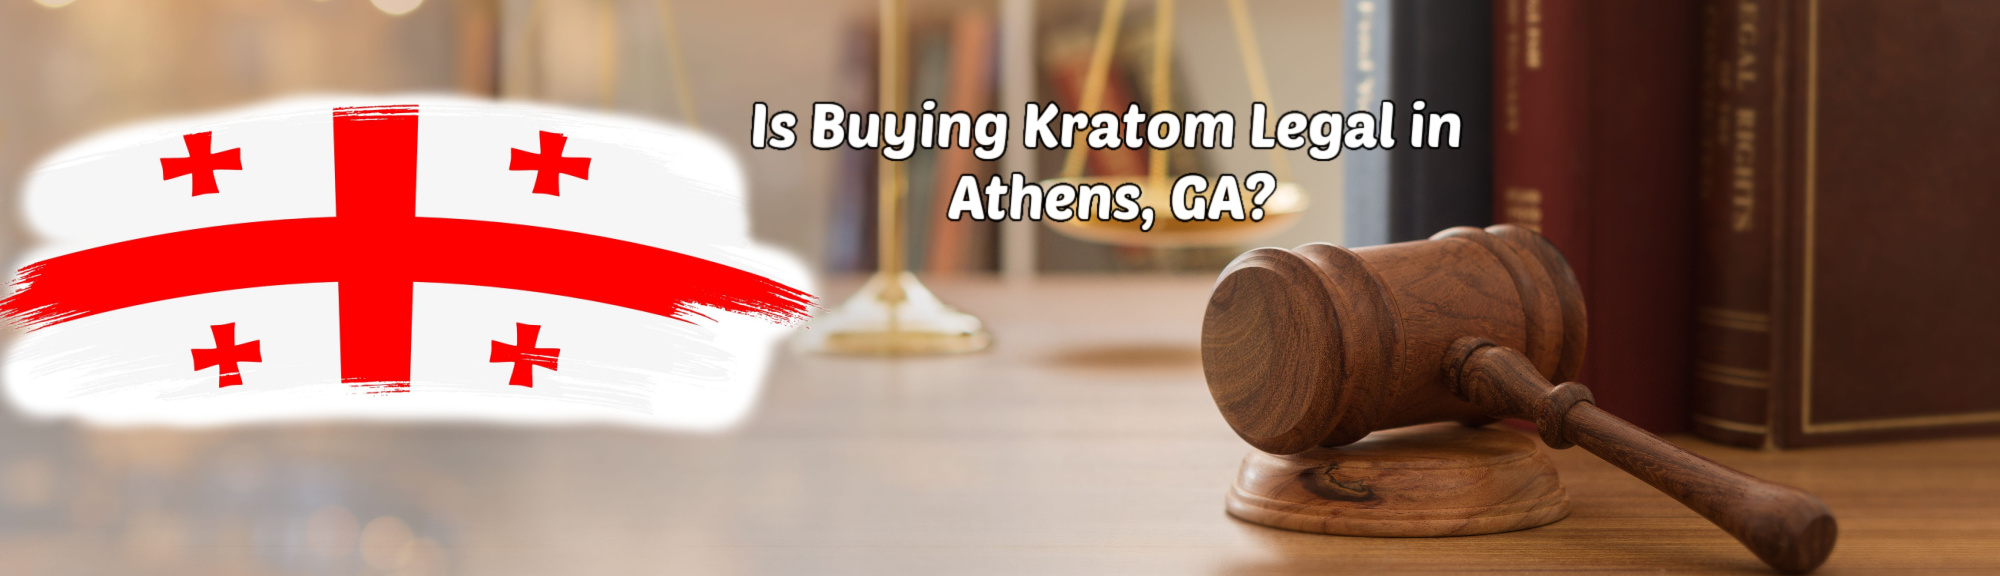 image of is buying kratom legal in athens ga